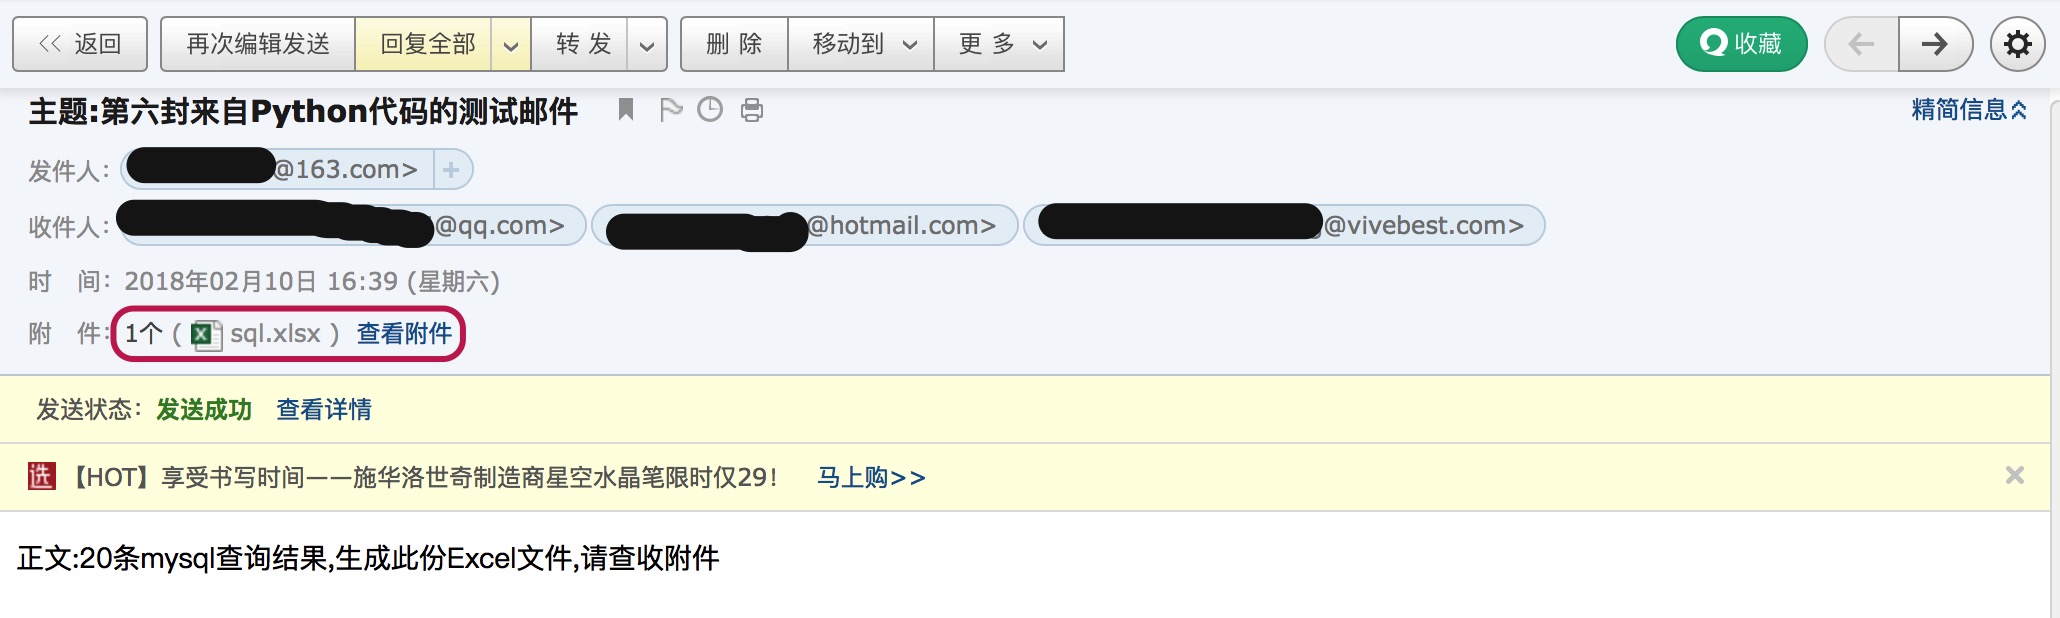 Email screenshot